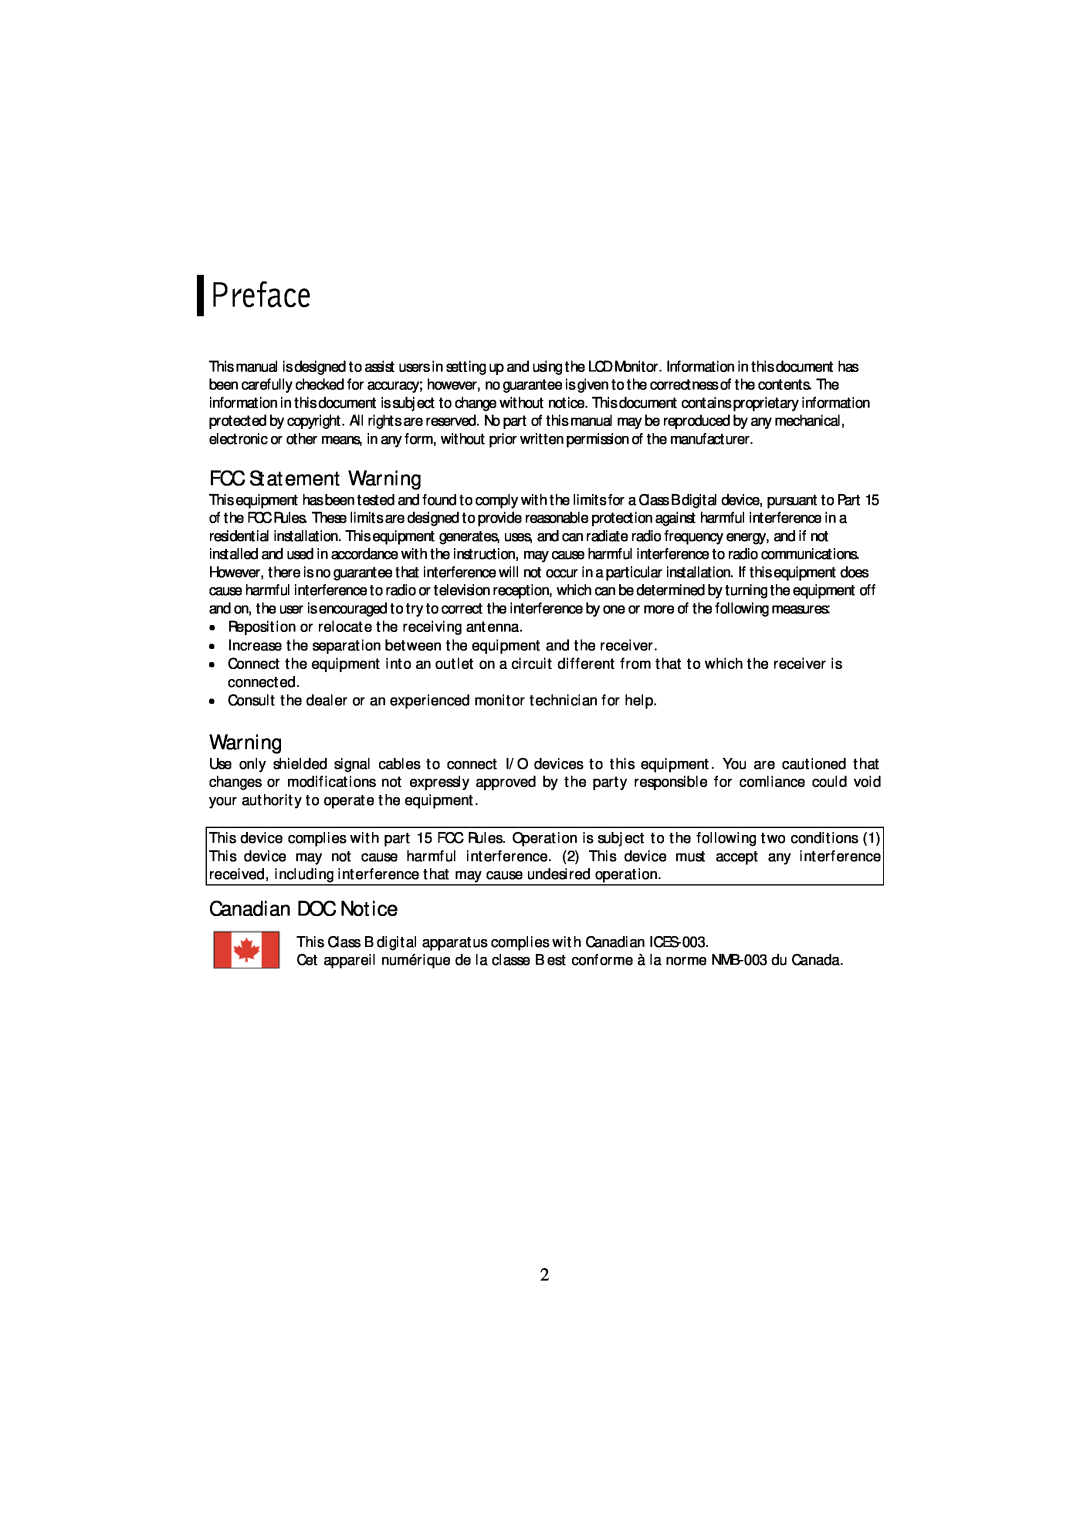 Planar PL2011MW manual Preface, FCC Statement Warning, Canadian DOC Notice 